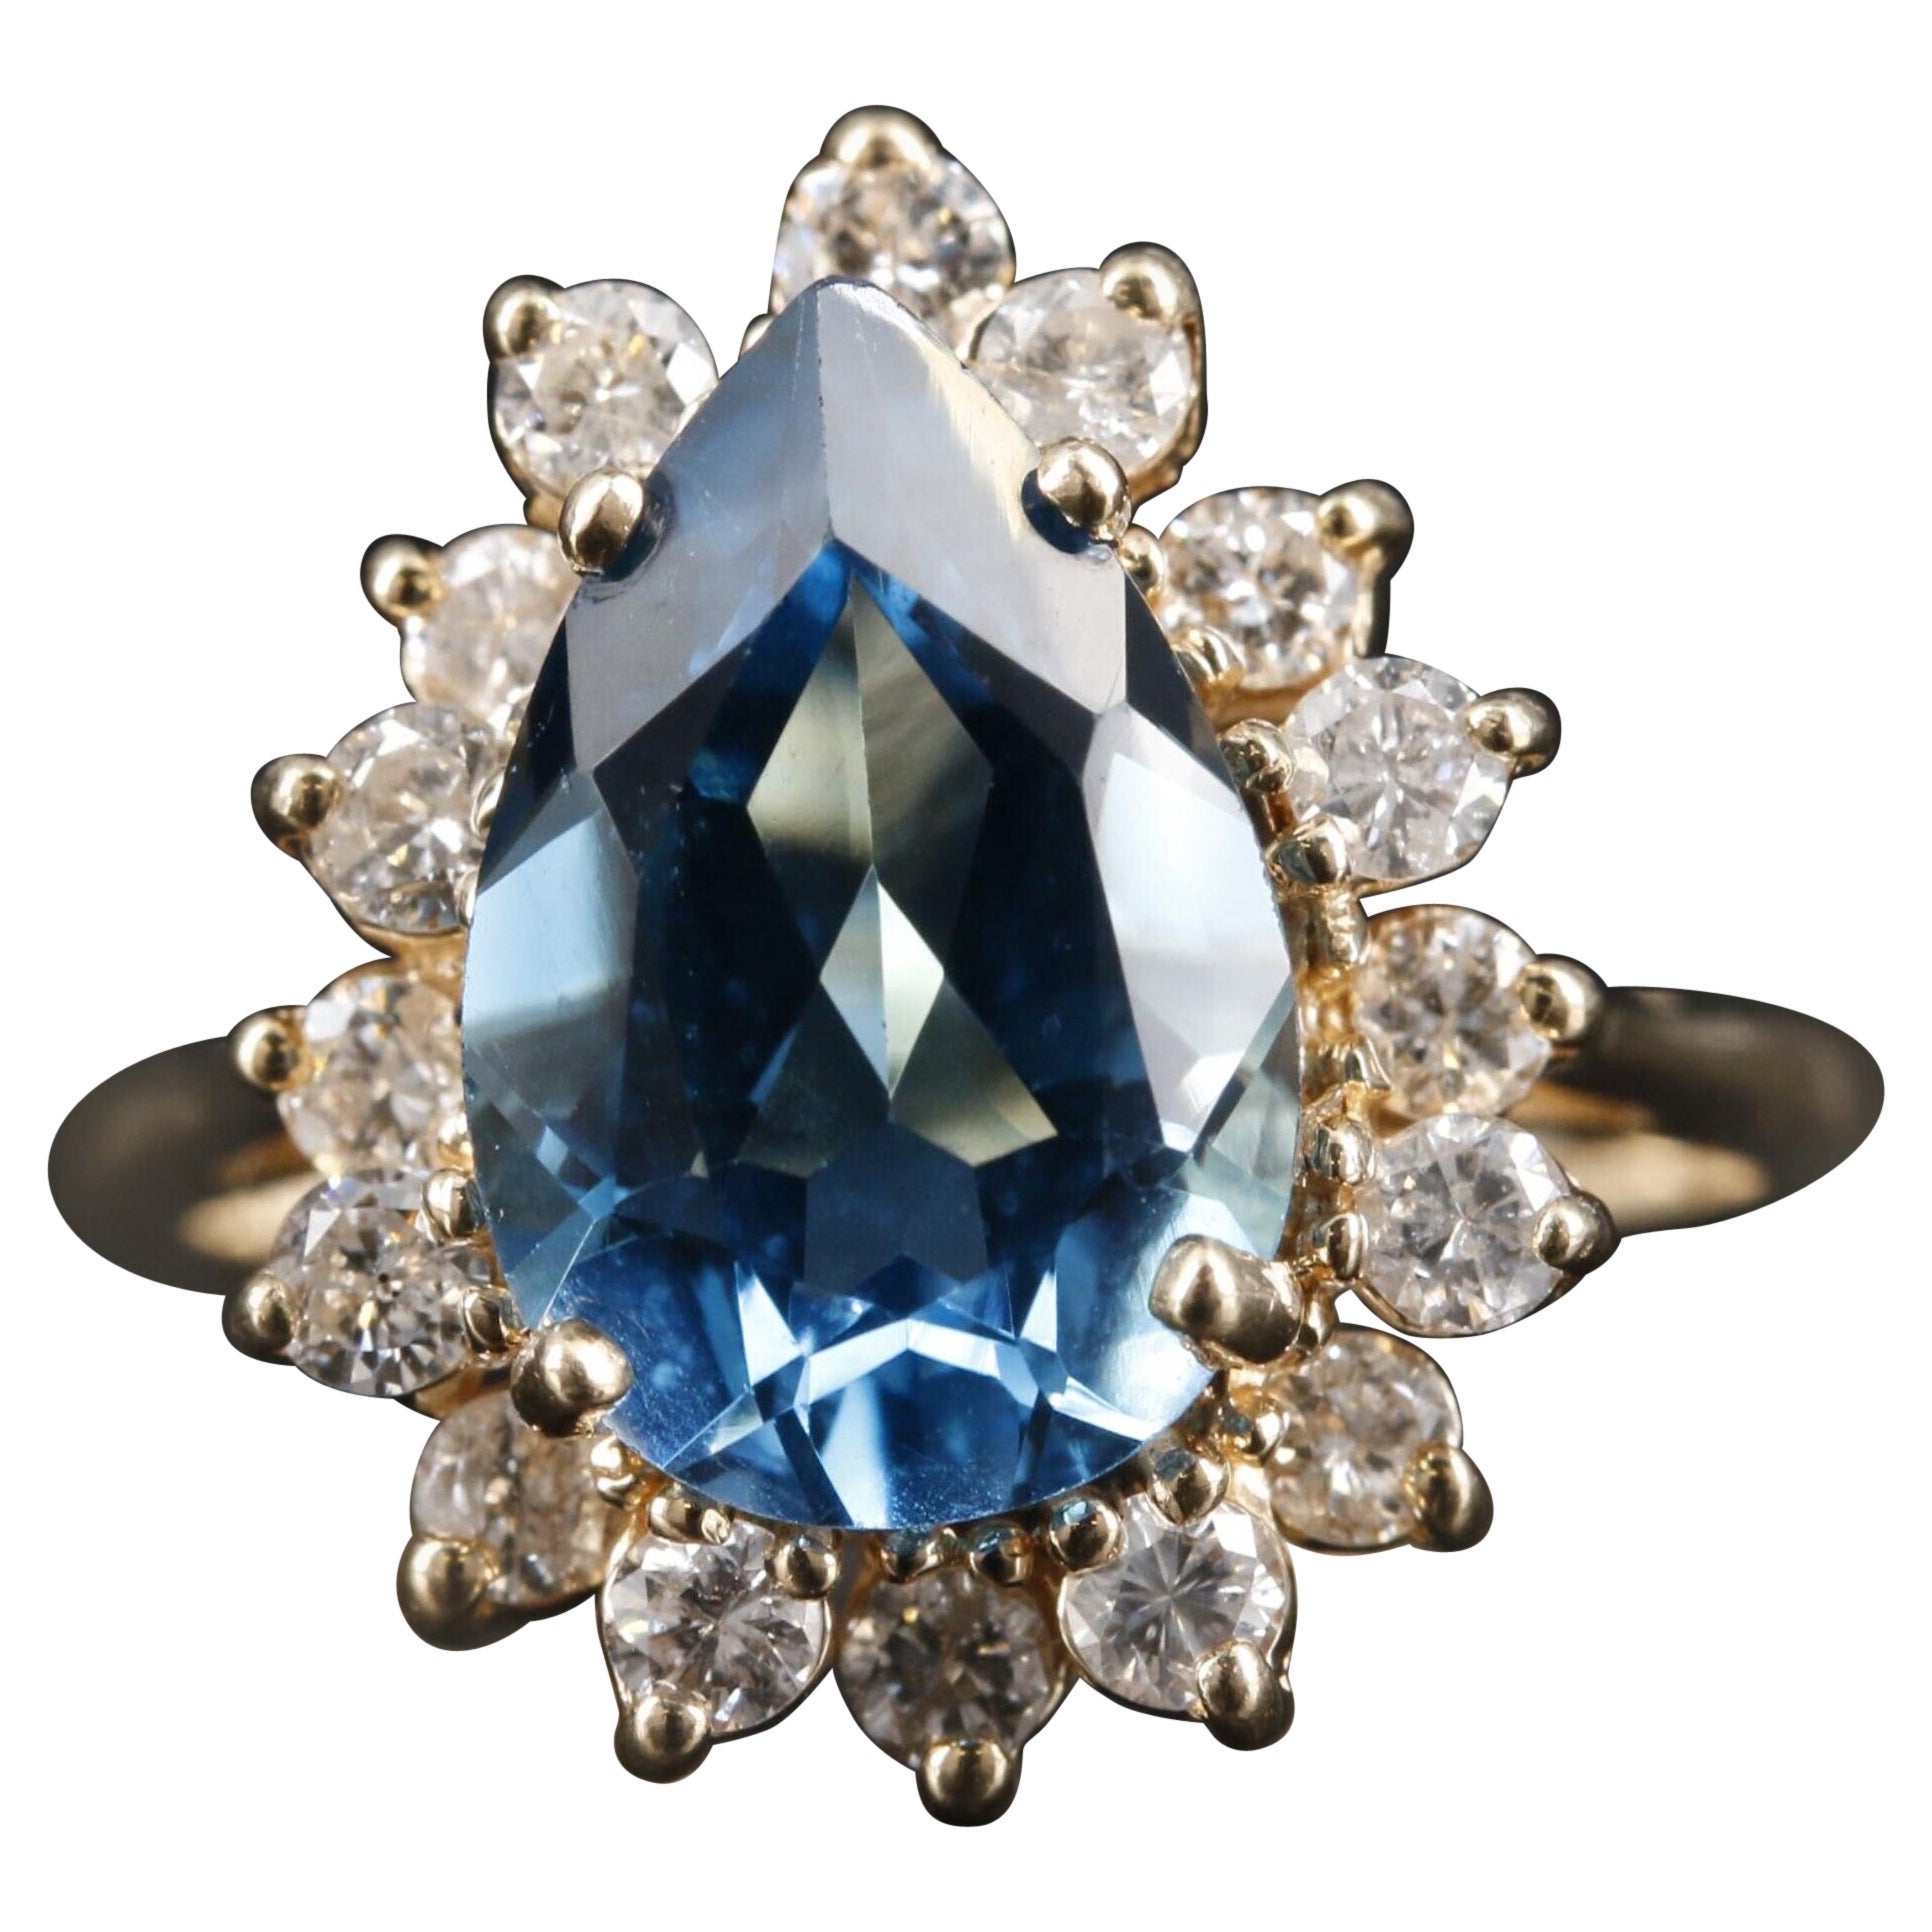 For Sale:  Certified 3 Carat Natural Pear Cut Aquamarine Diamond Art Deco Cocktail Ring